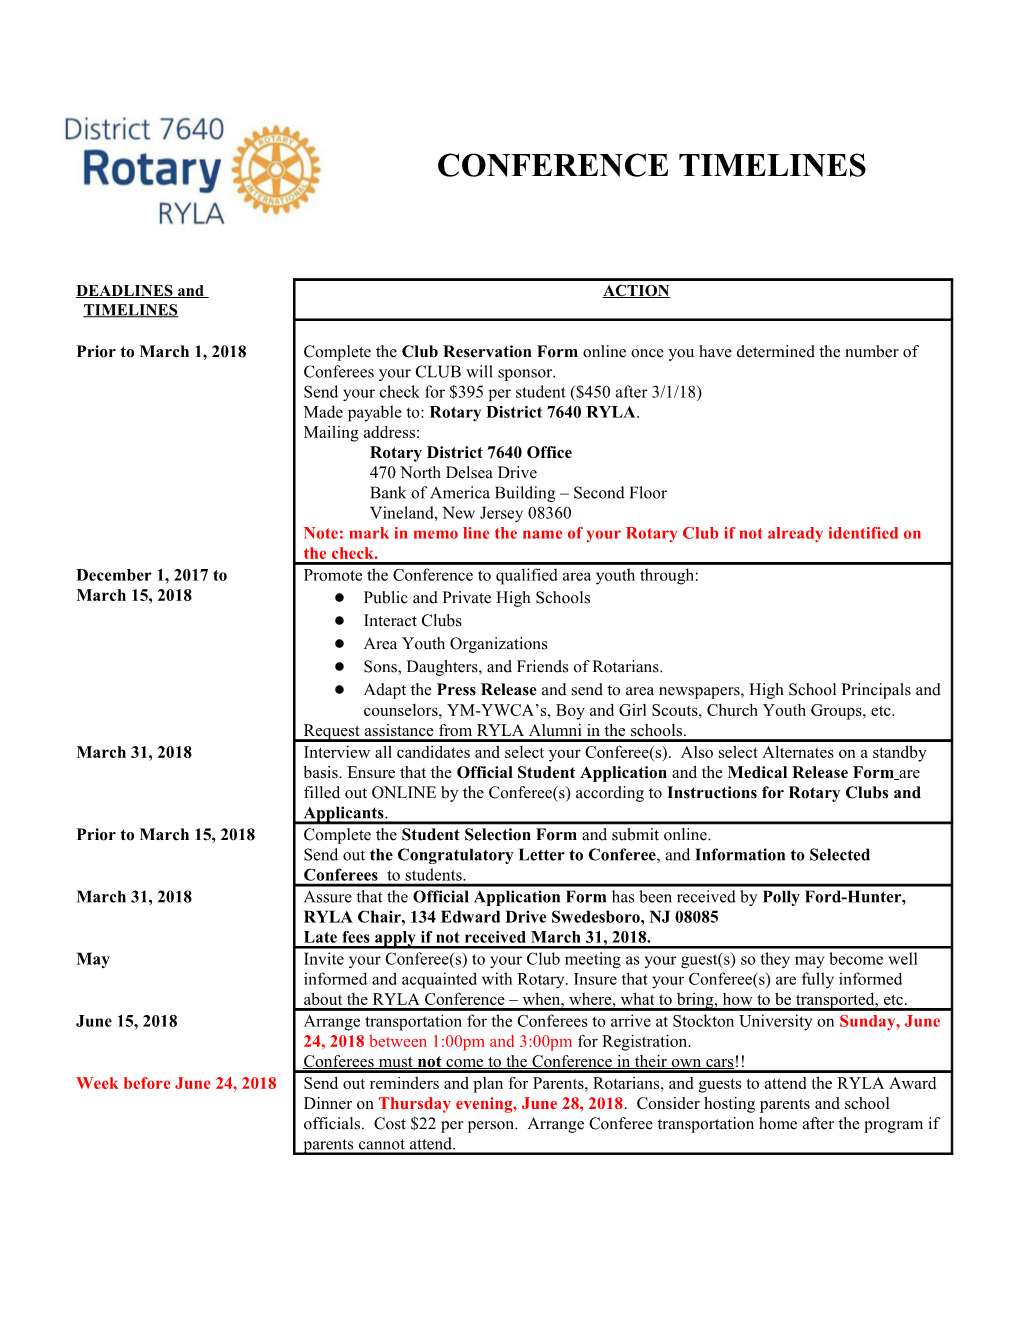 Conference Timelines